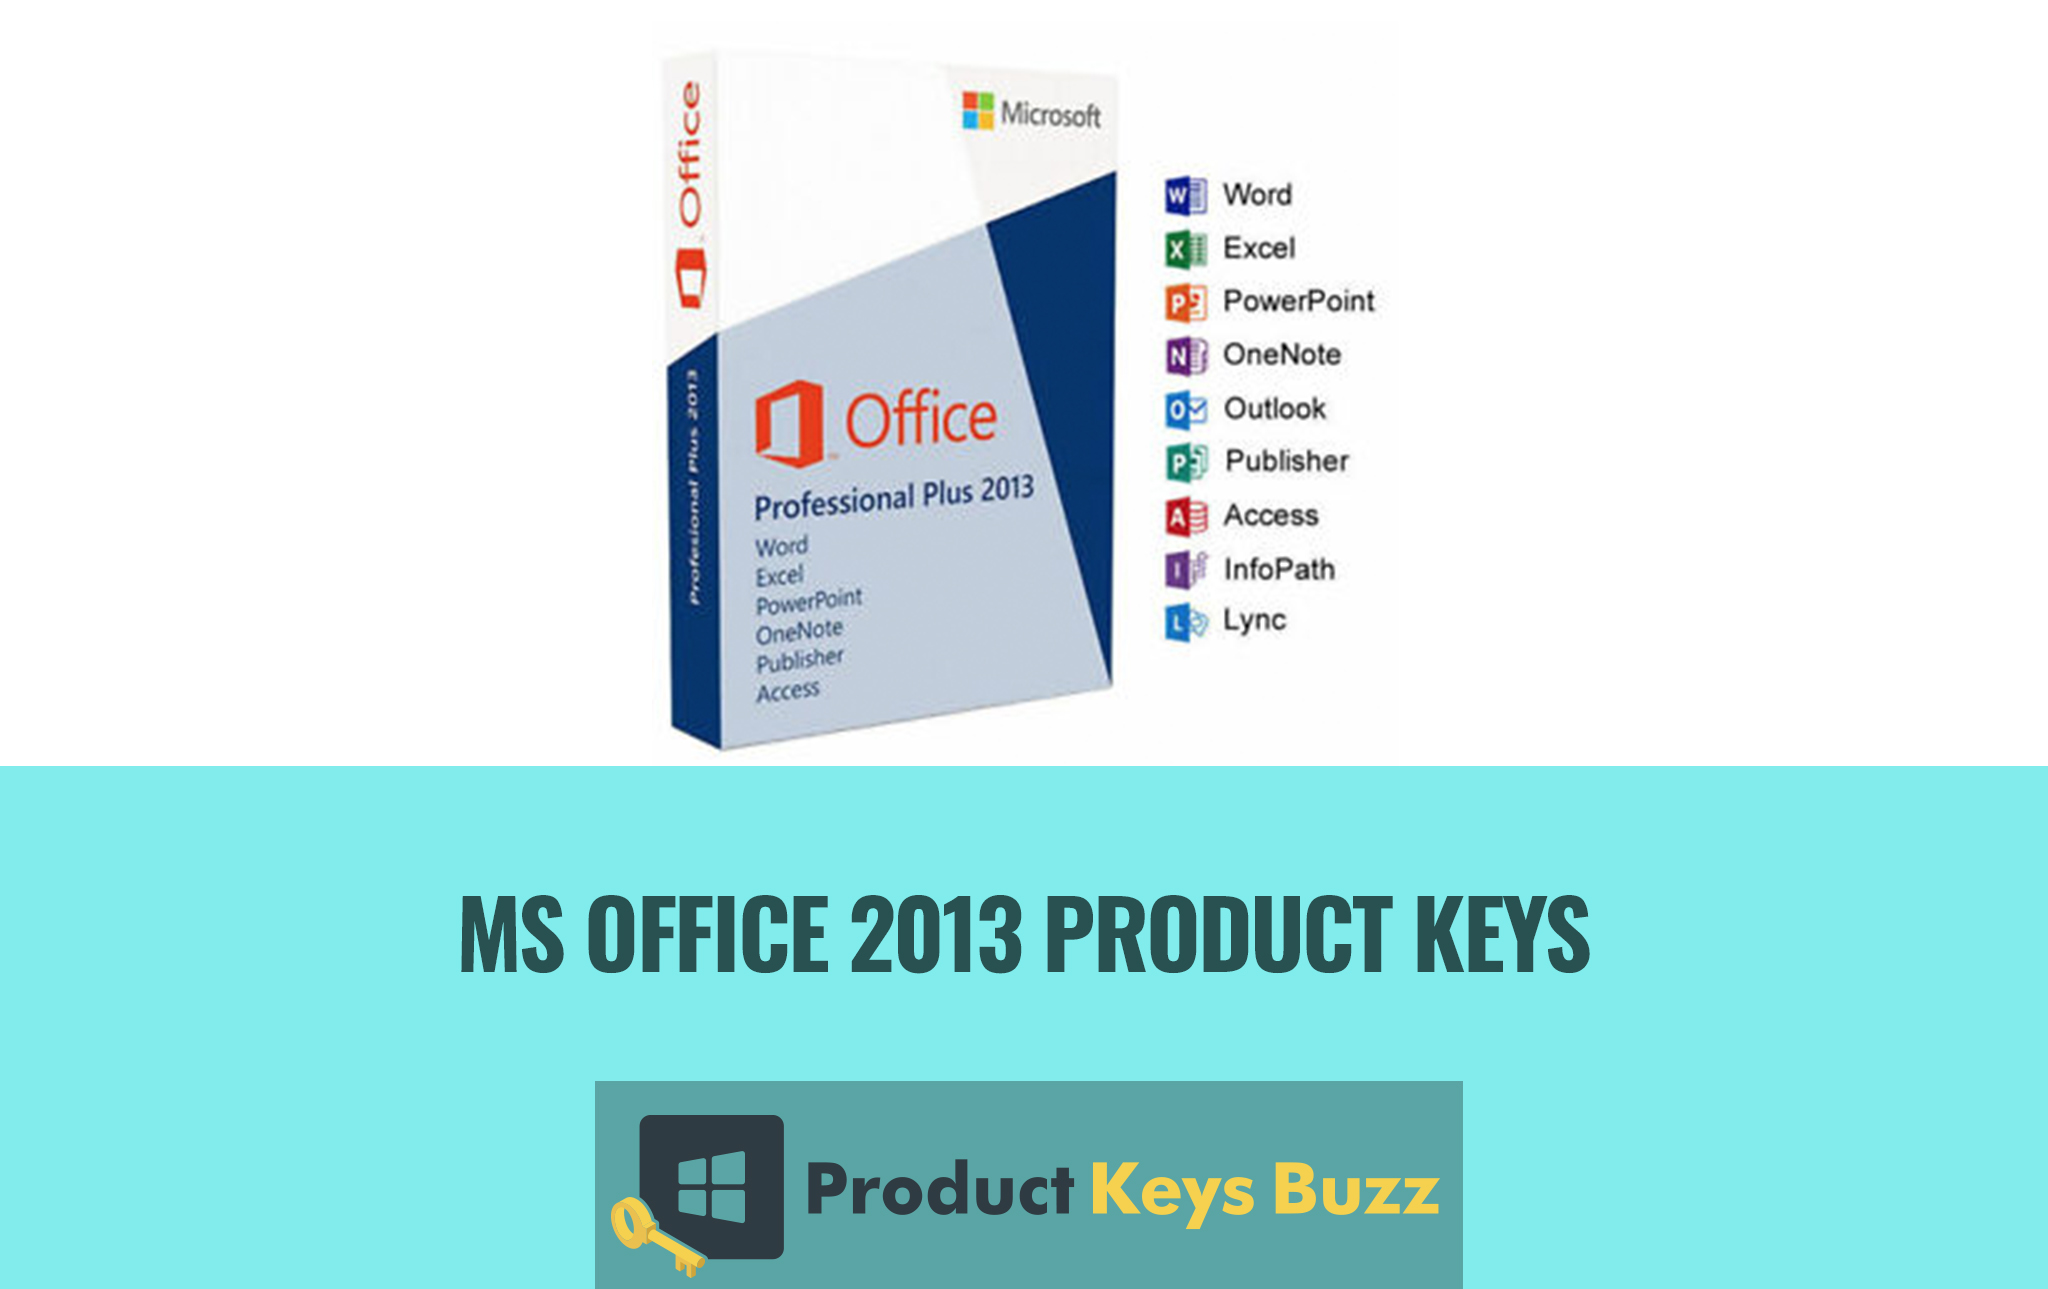 microsoft office 2013 crack download